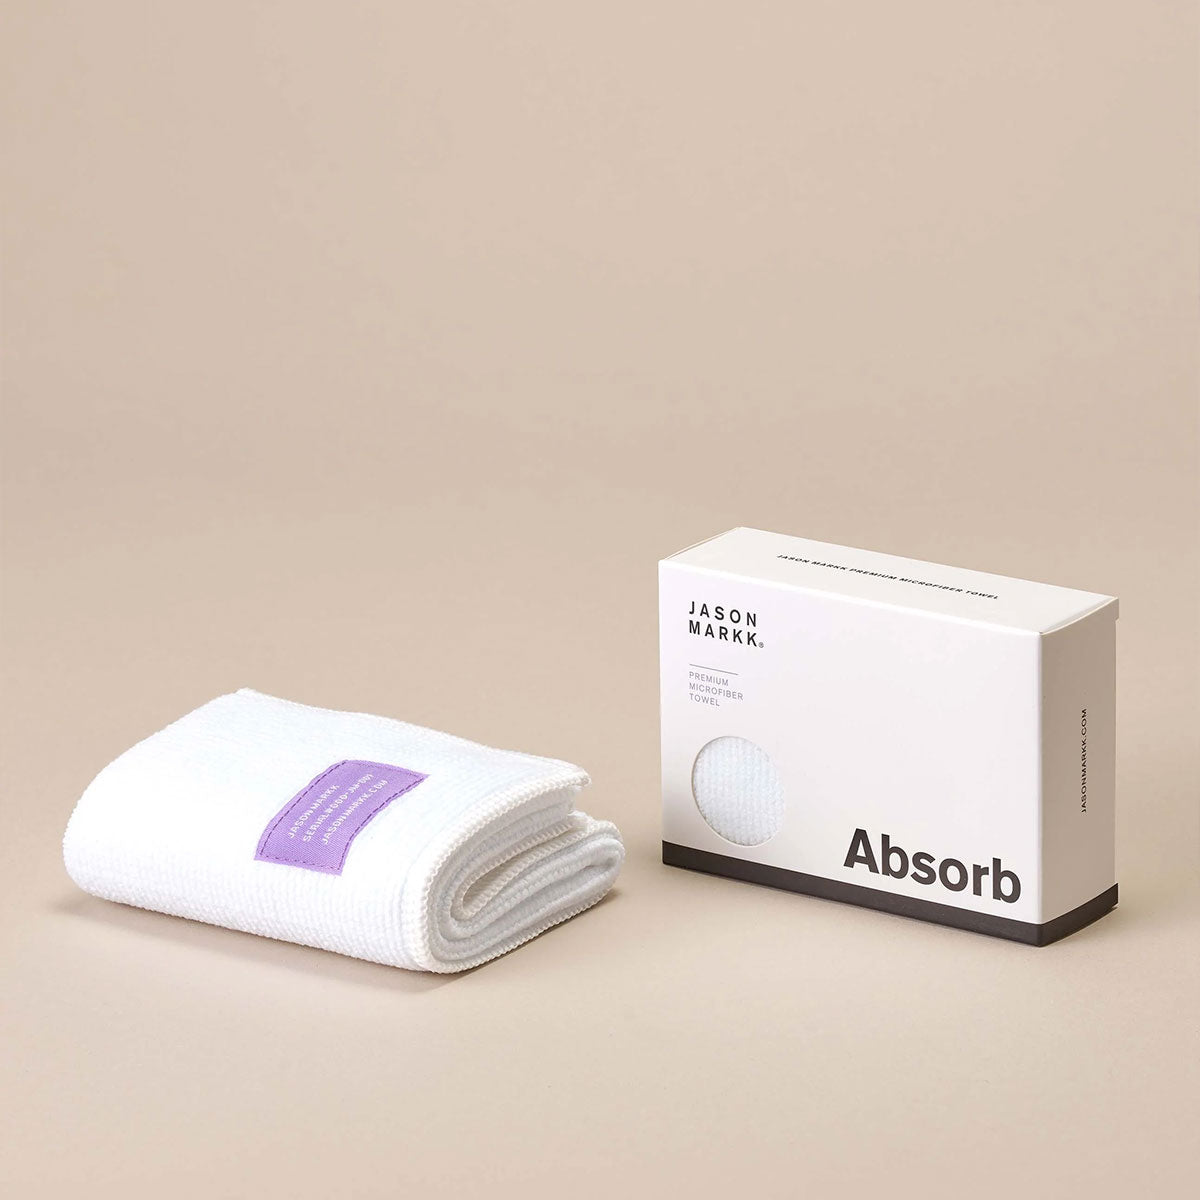 Toalla de Microfibra Premium para Limpieza de Calzado "Premium Microfiber Towel" - Limpiadores de Calzado Jason Markk